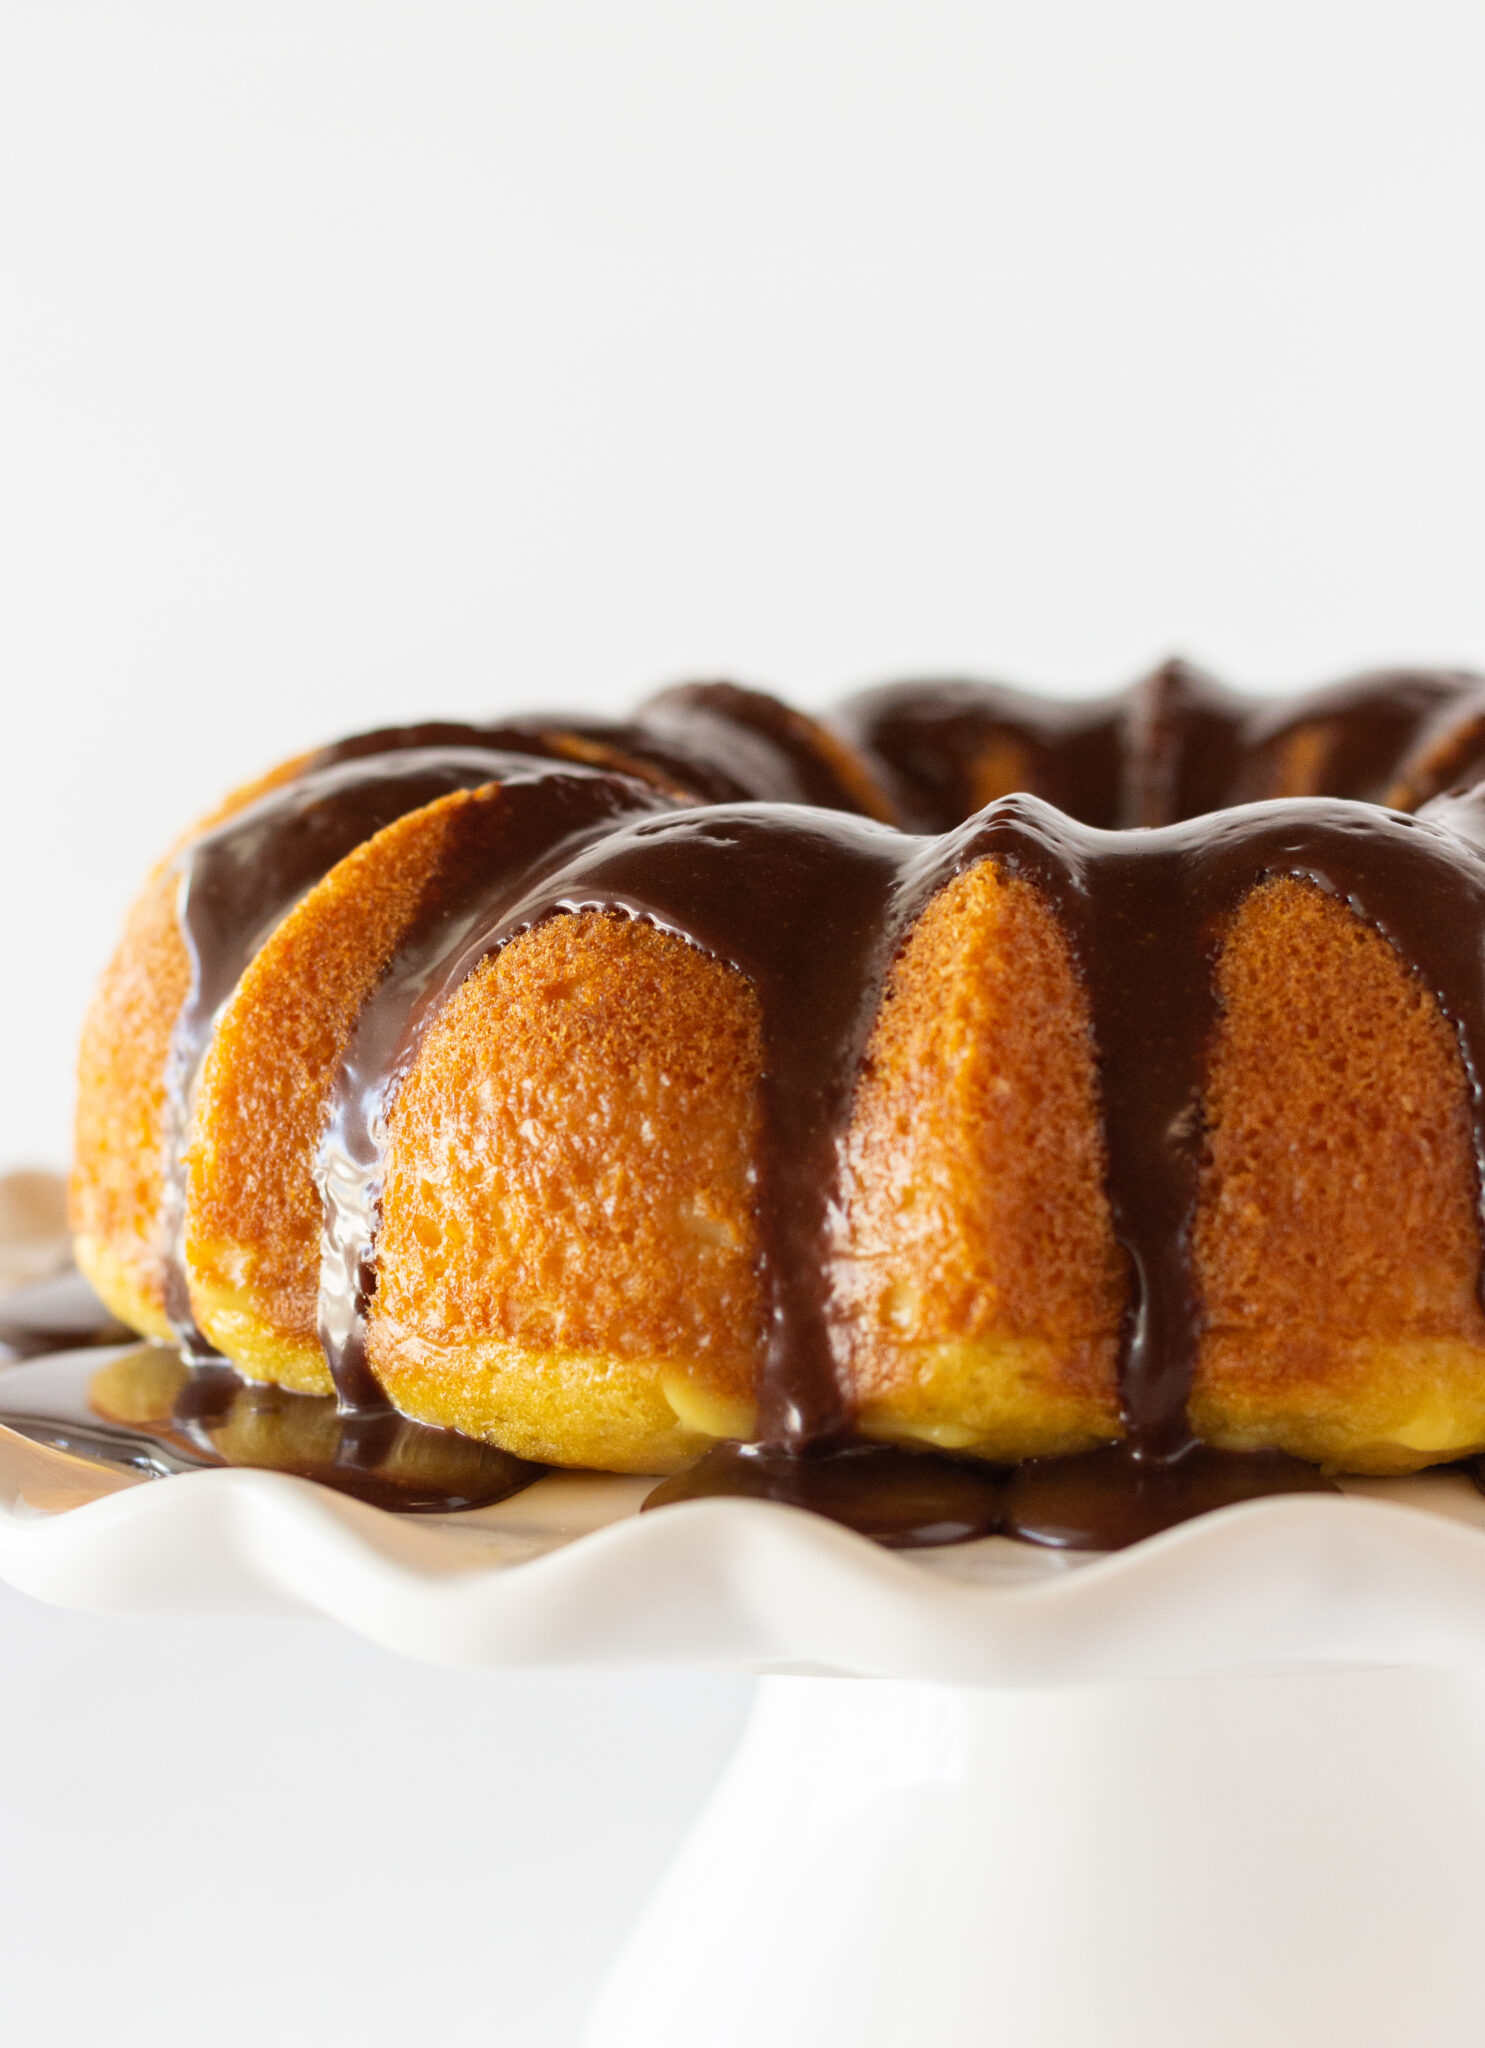 Boston cream pie poke cake recipe featured by top US desserts blogger, Practically Homemade